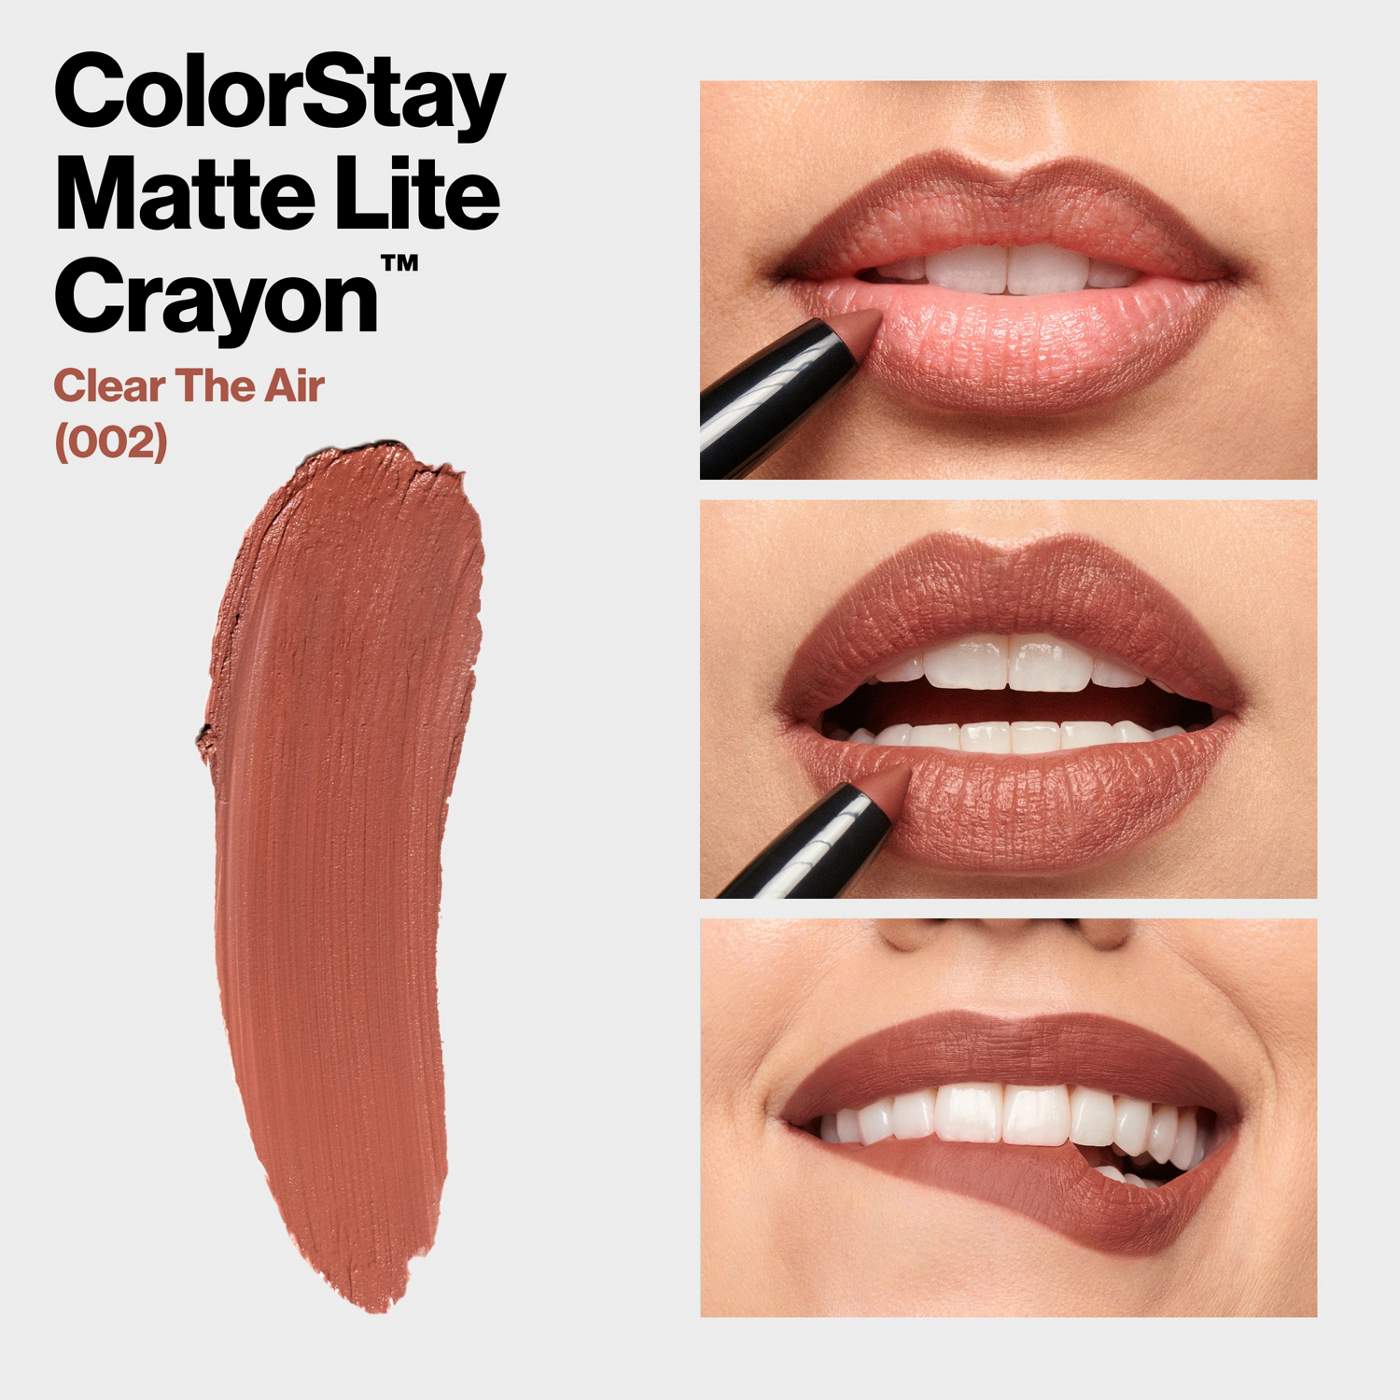 Revlon ColorStay Matte Lite Crayon Lipstick - Clear The Air; image 3 of 7